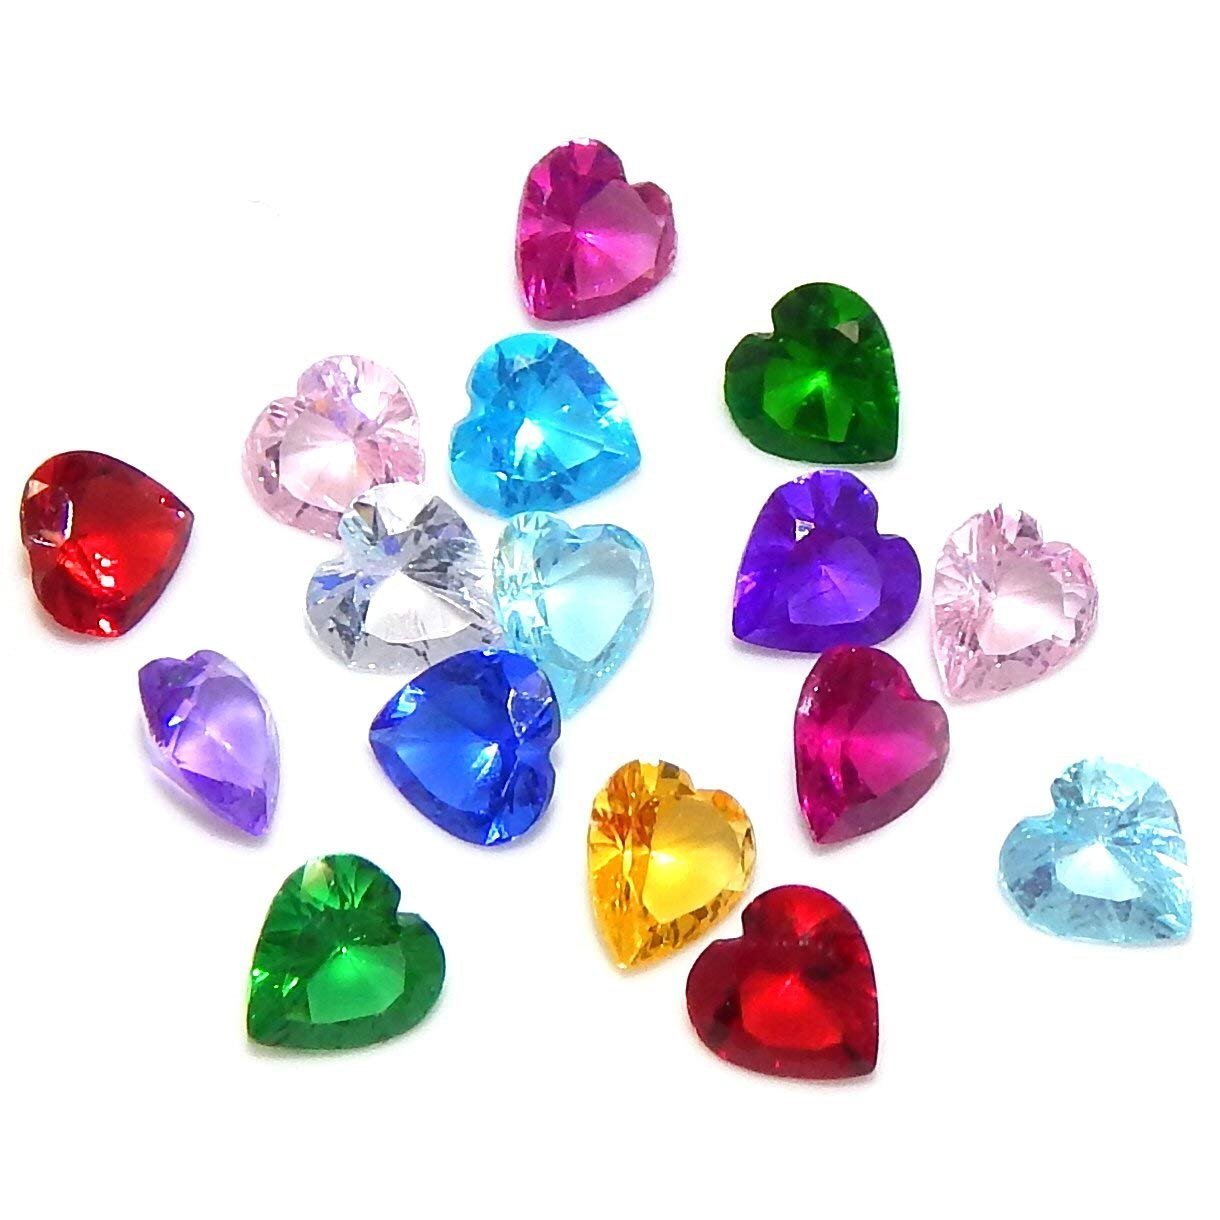 Memory Locket Charm - Birthstone Crystal Heart (August - Peridot) - The Little Jewellery Company